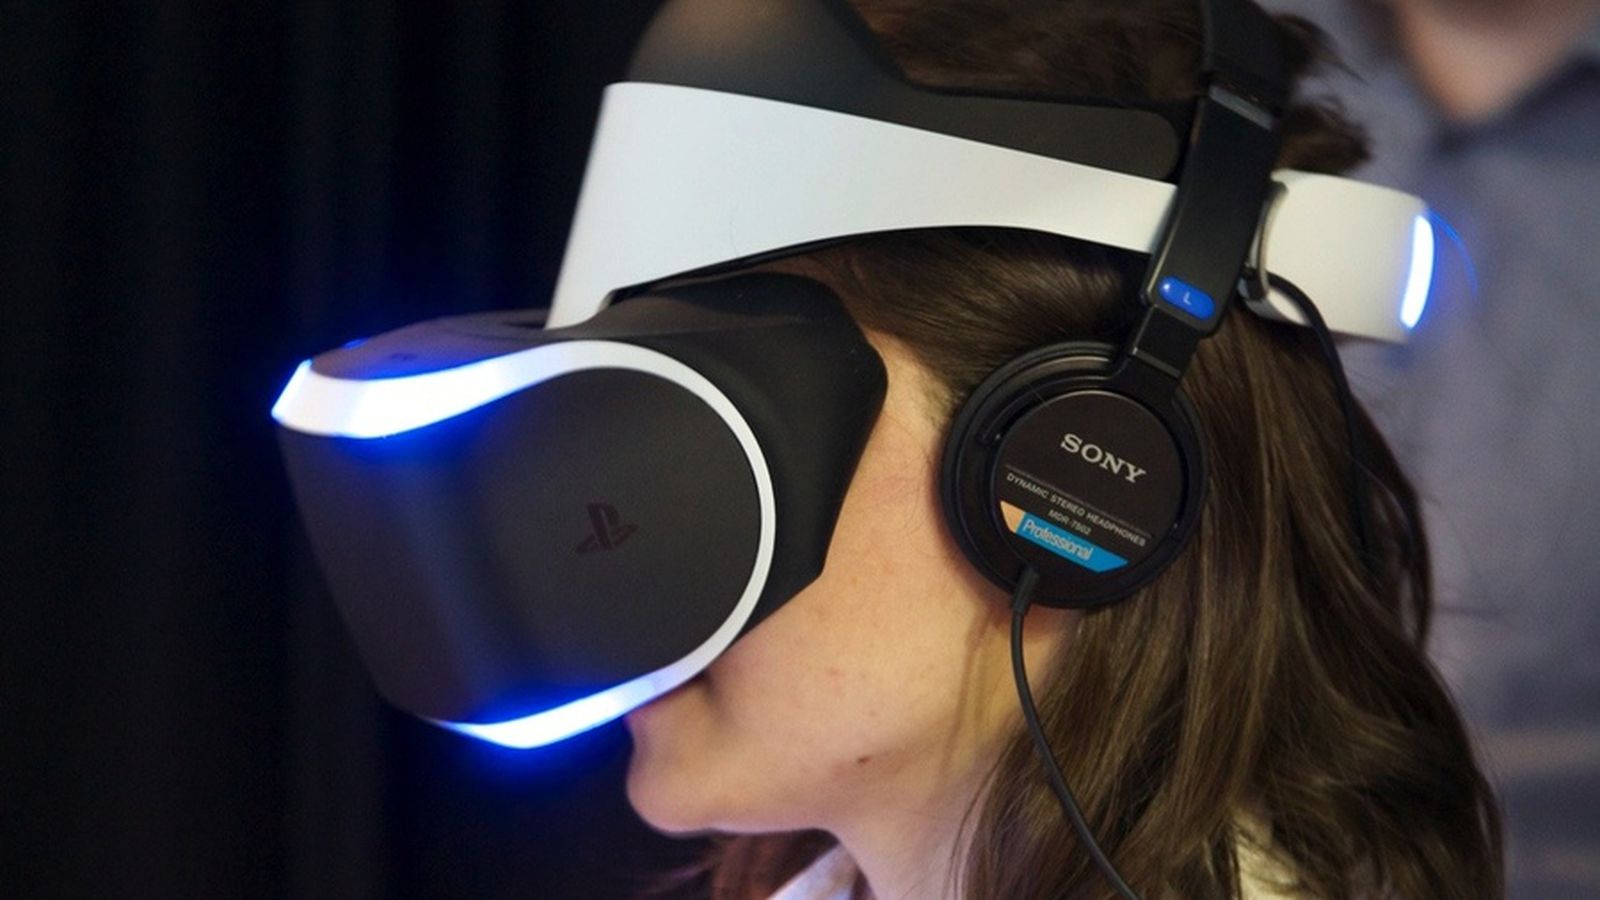 virtual reality gaming headset